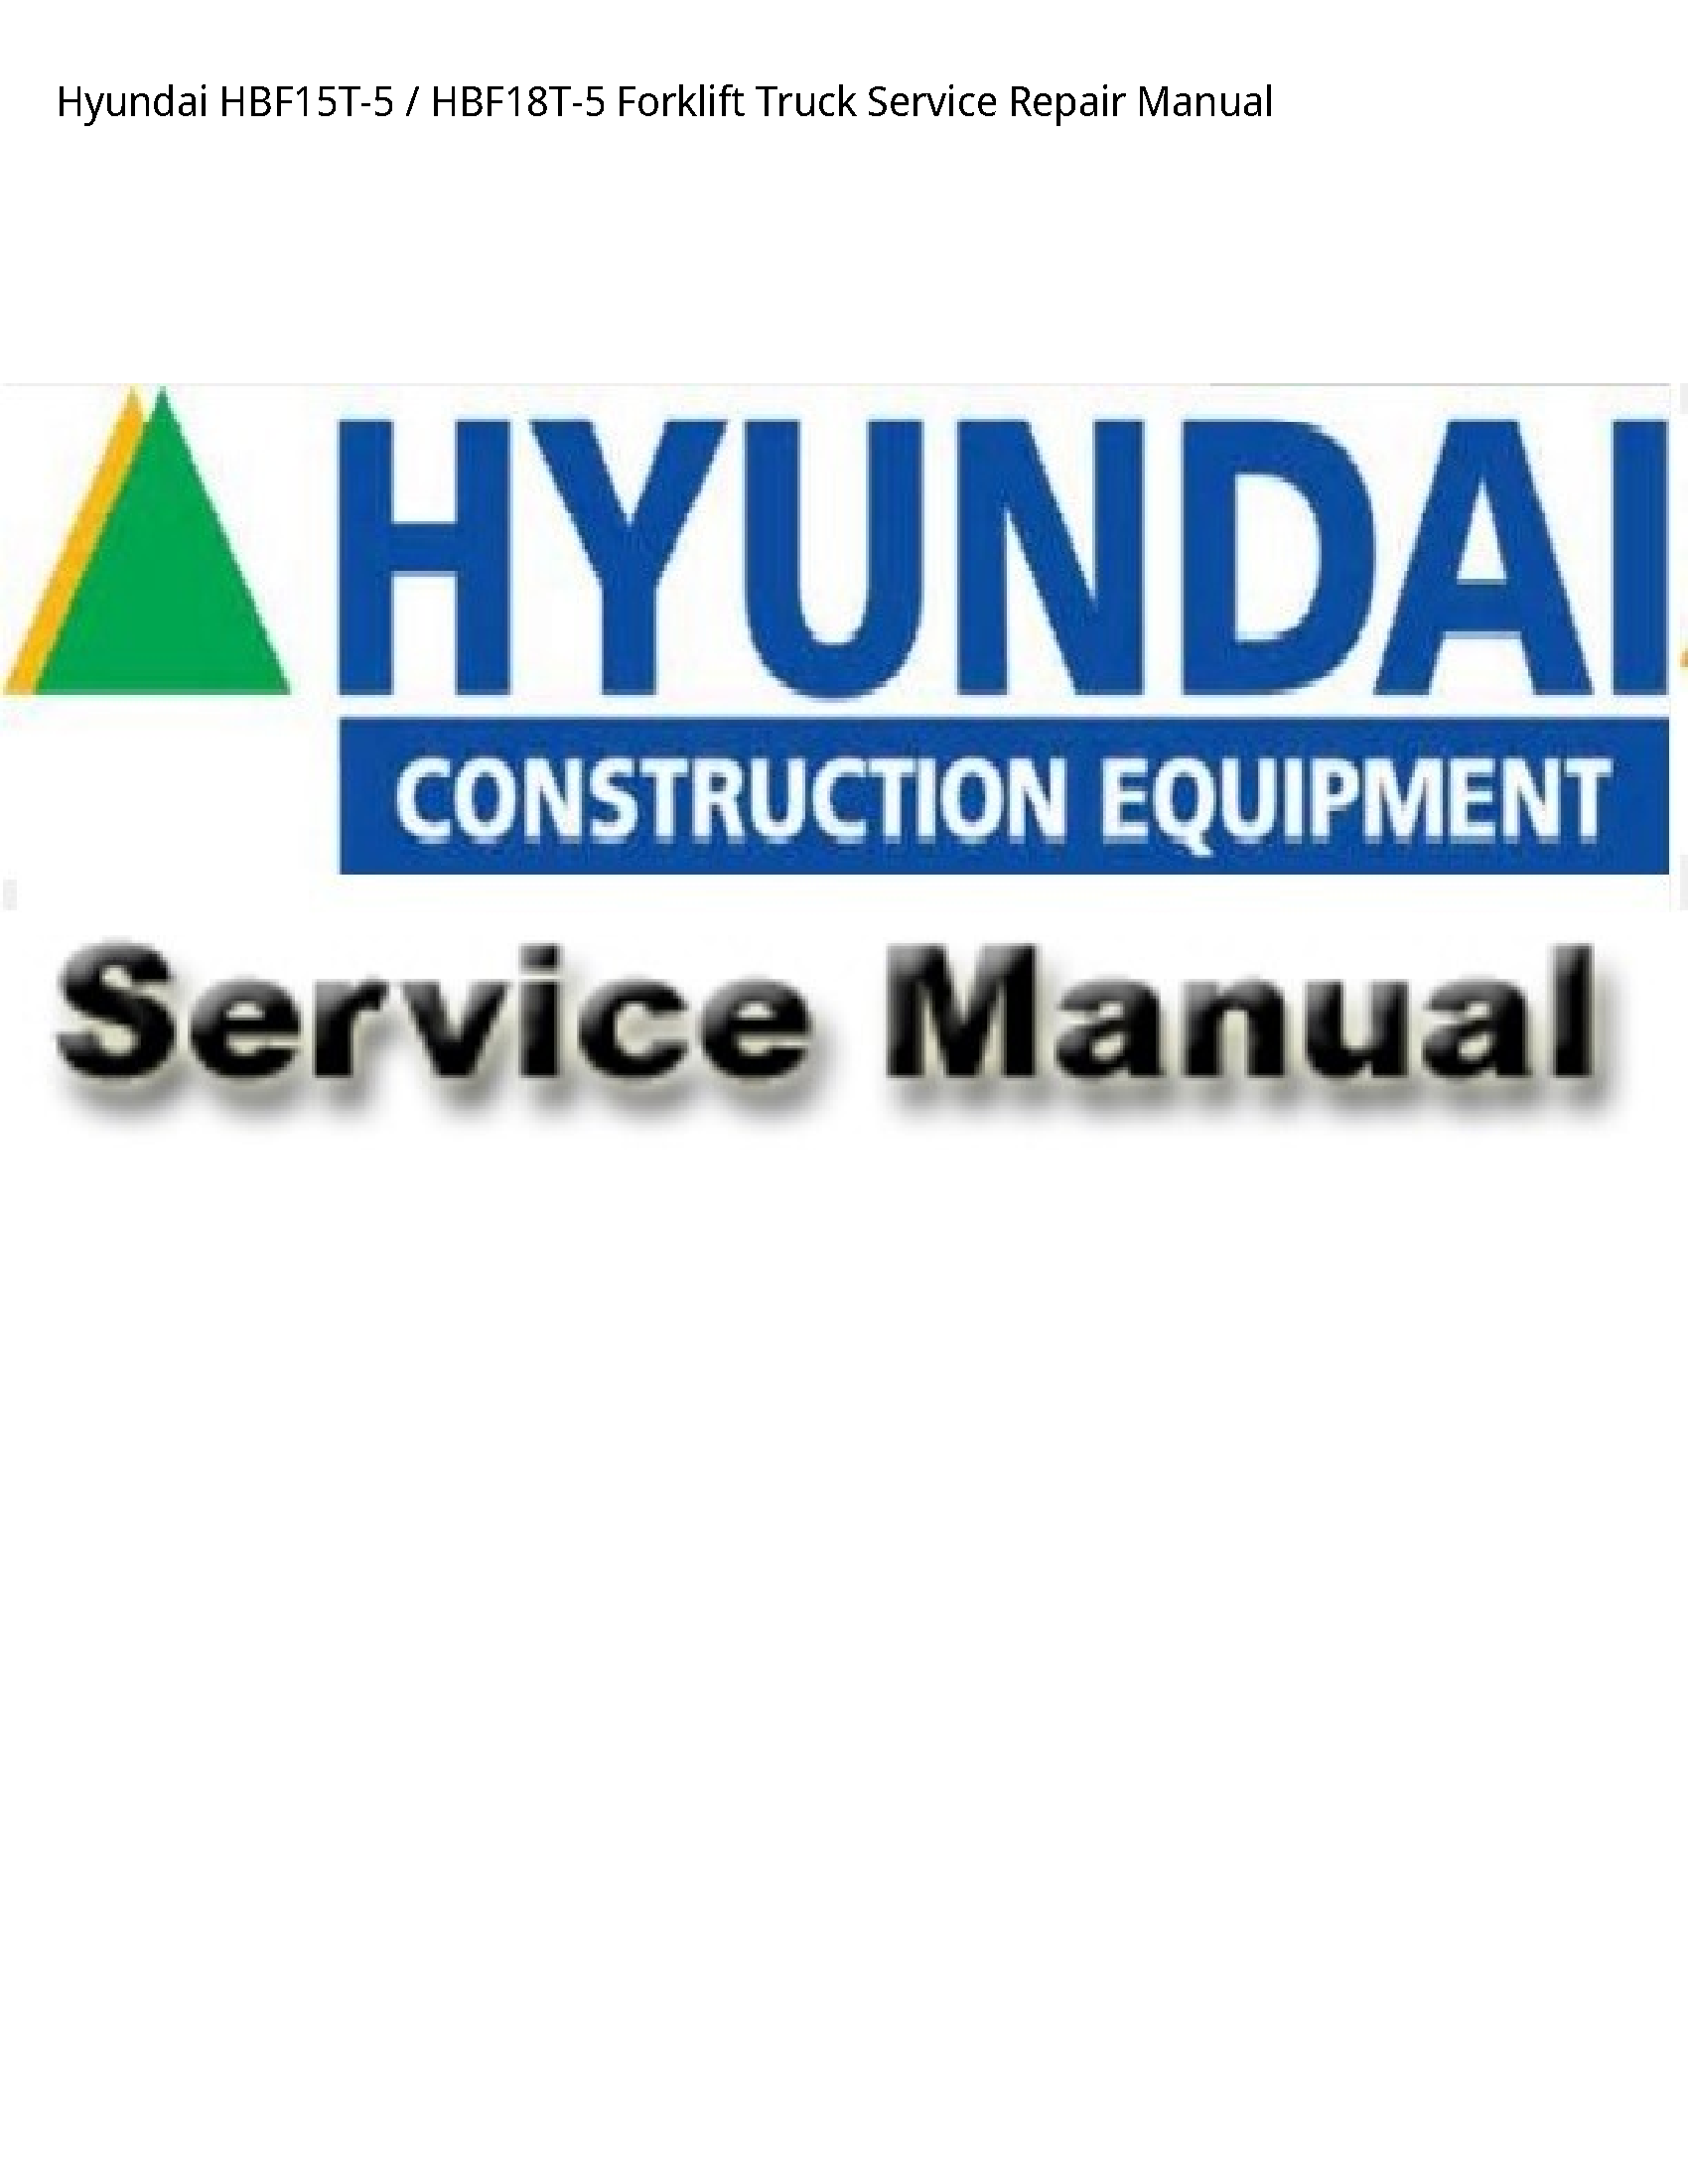 Hyundai HBF15T-5 Forklift Truck manual